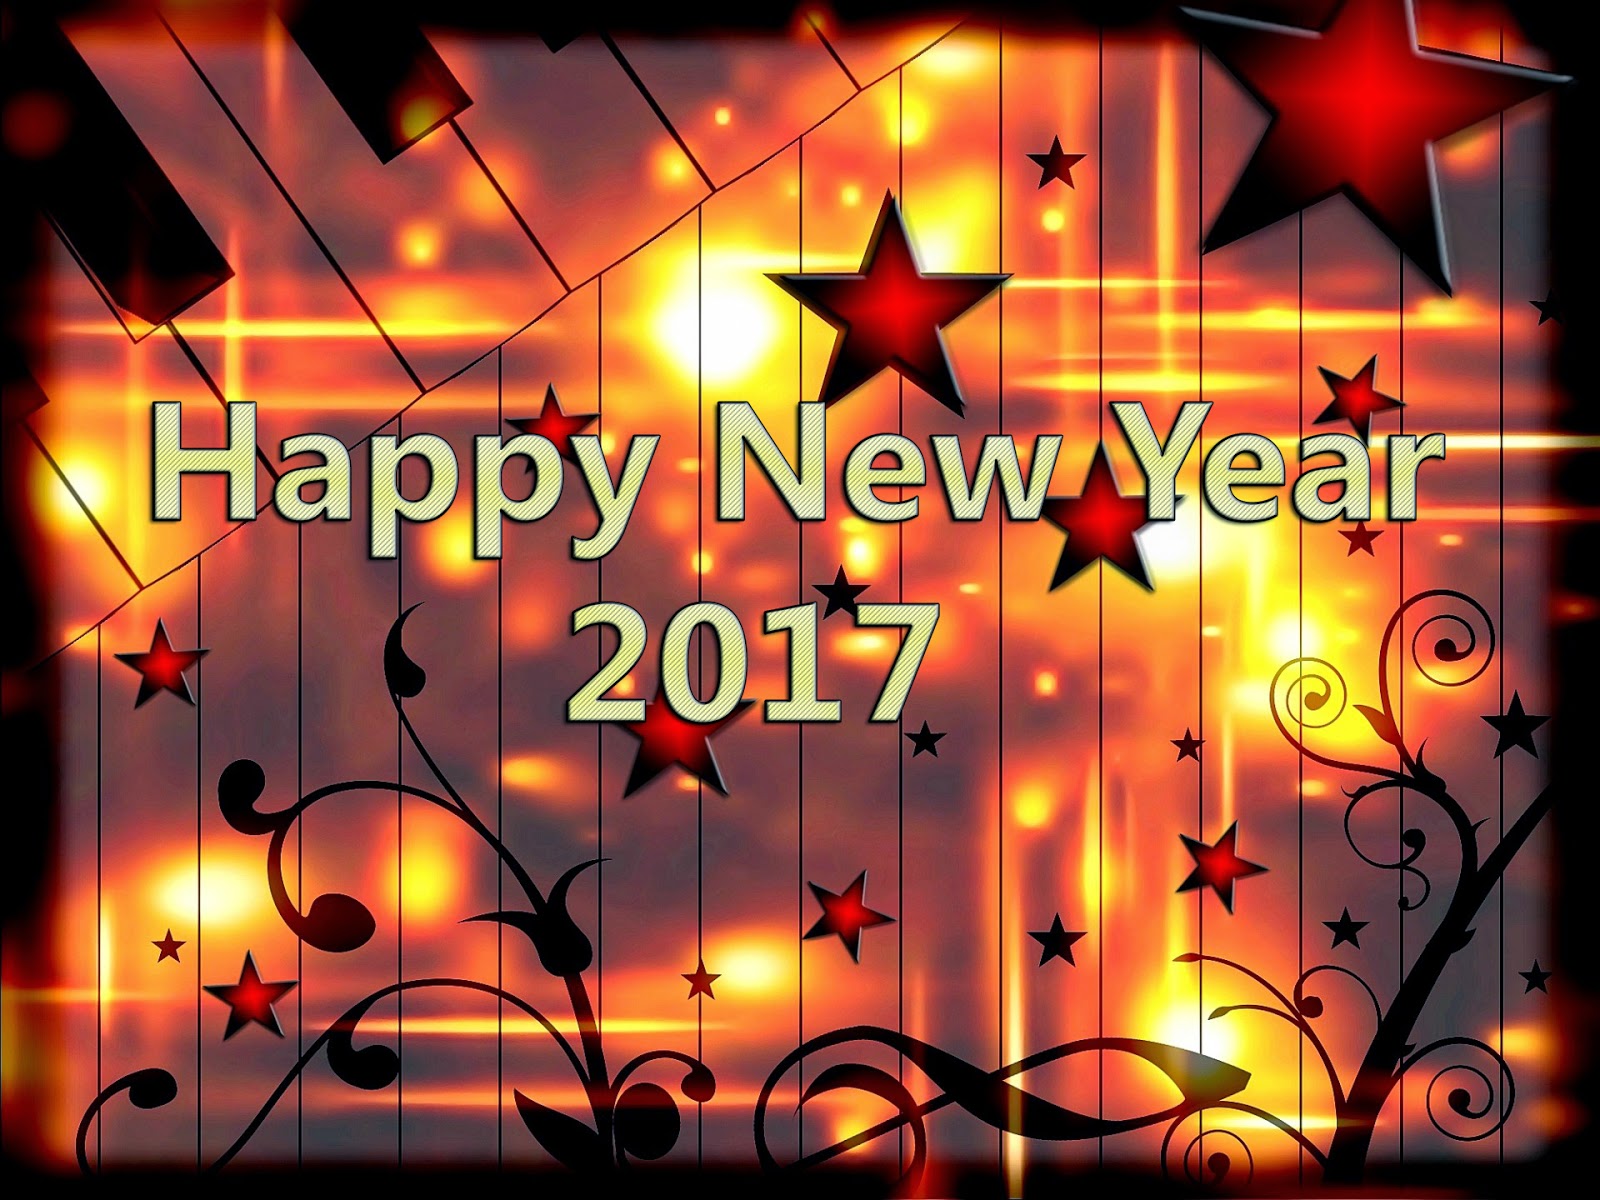 2017_happy new year 2017-1.jpg